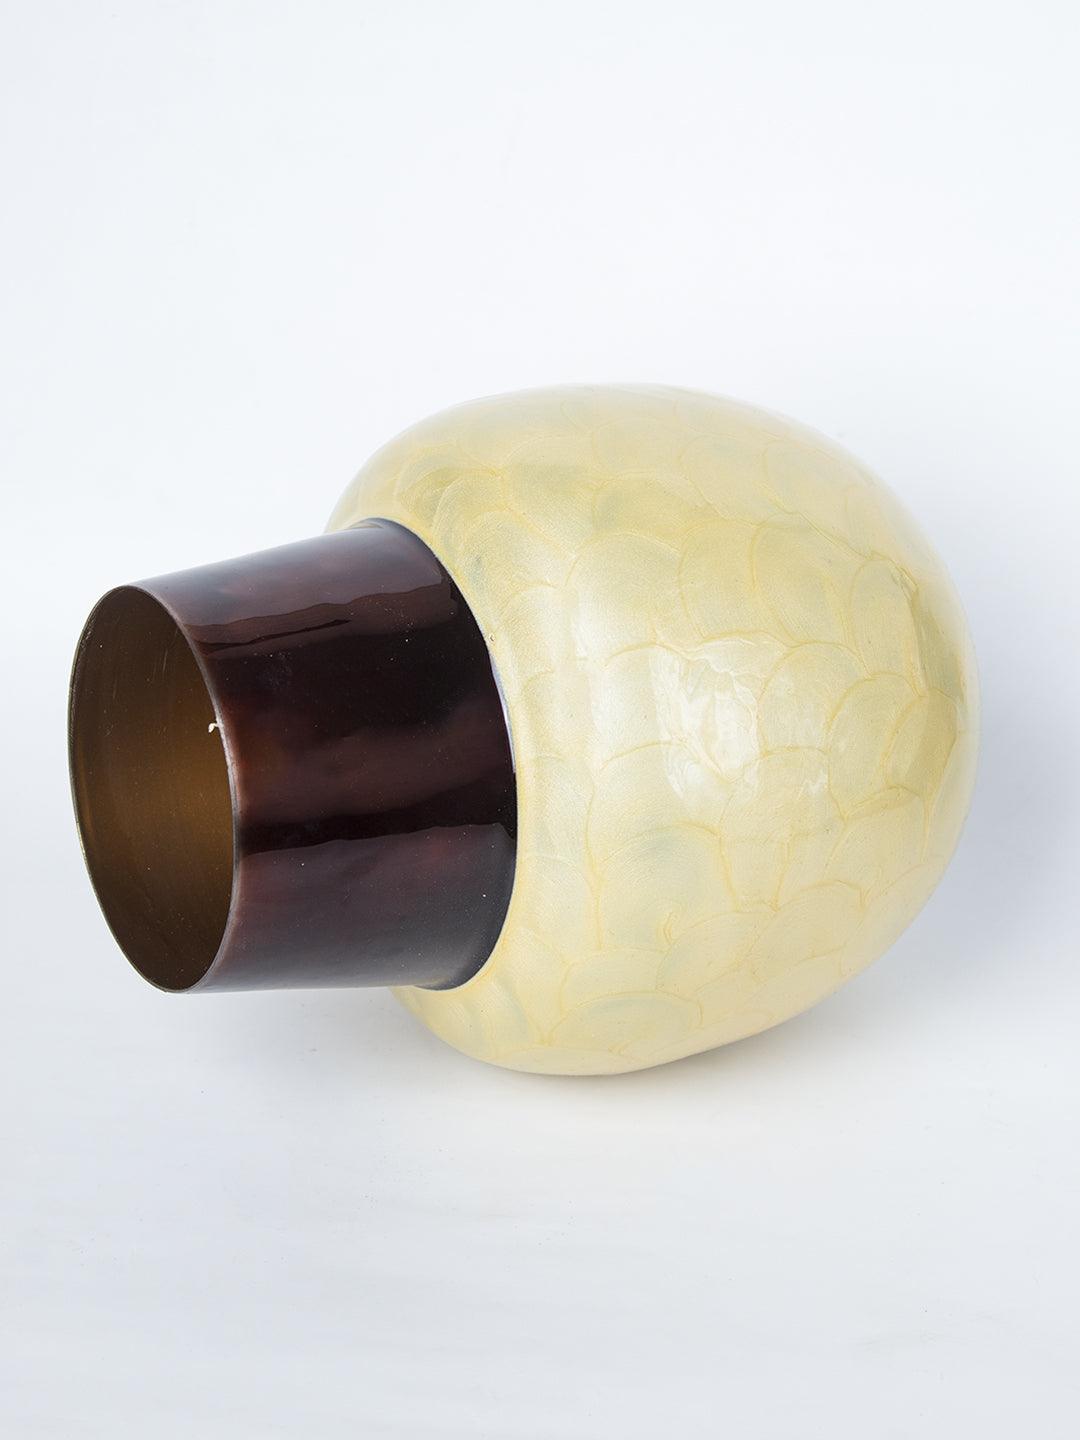 Mustard Globular Shape Pot Vase (Mustard Enamel) - 4